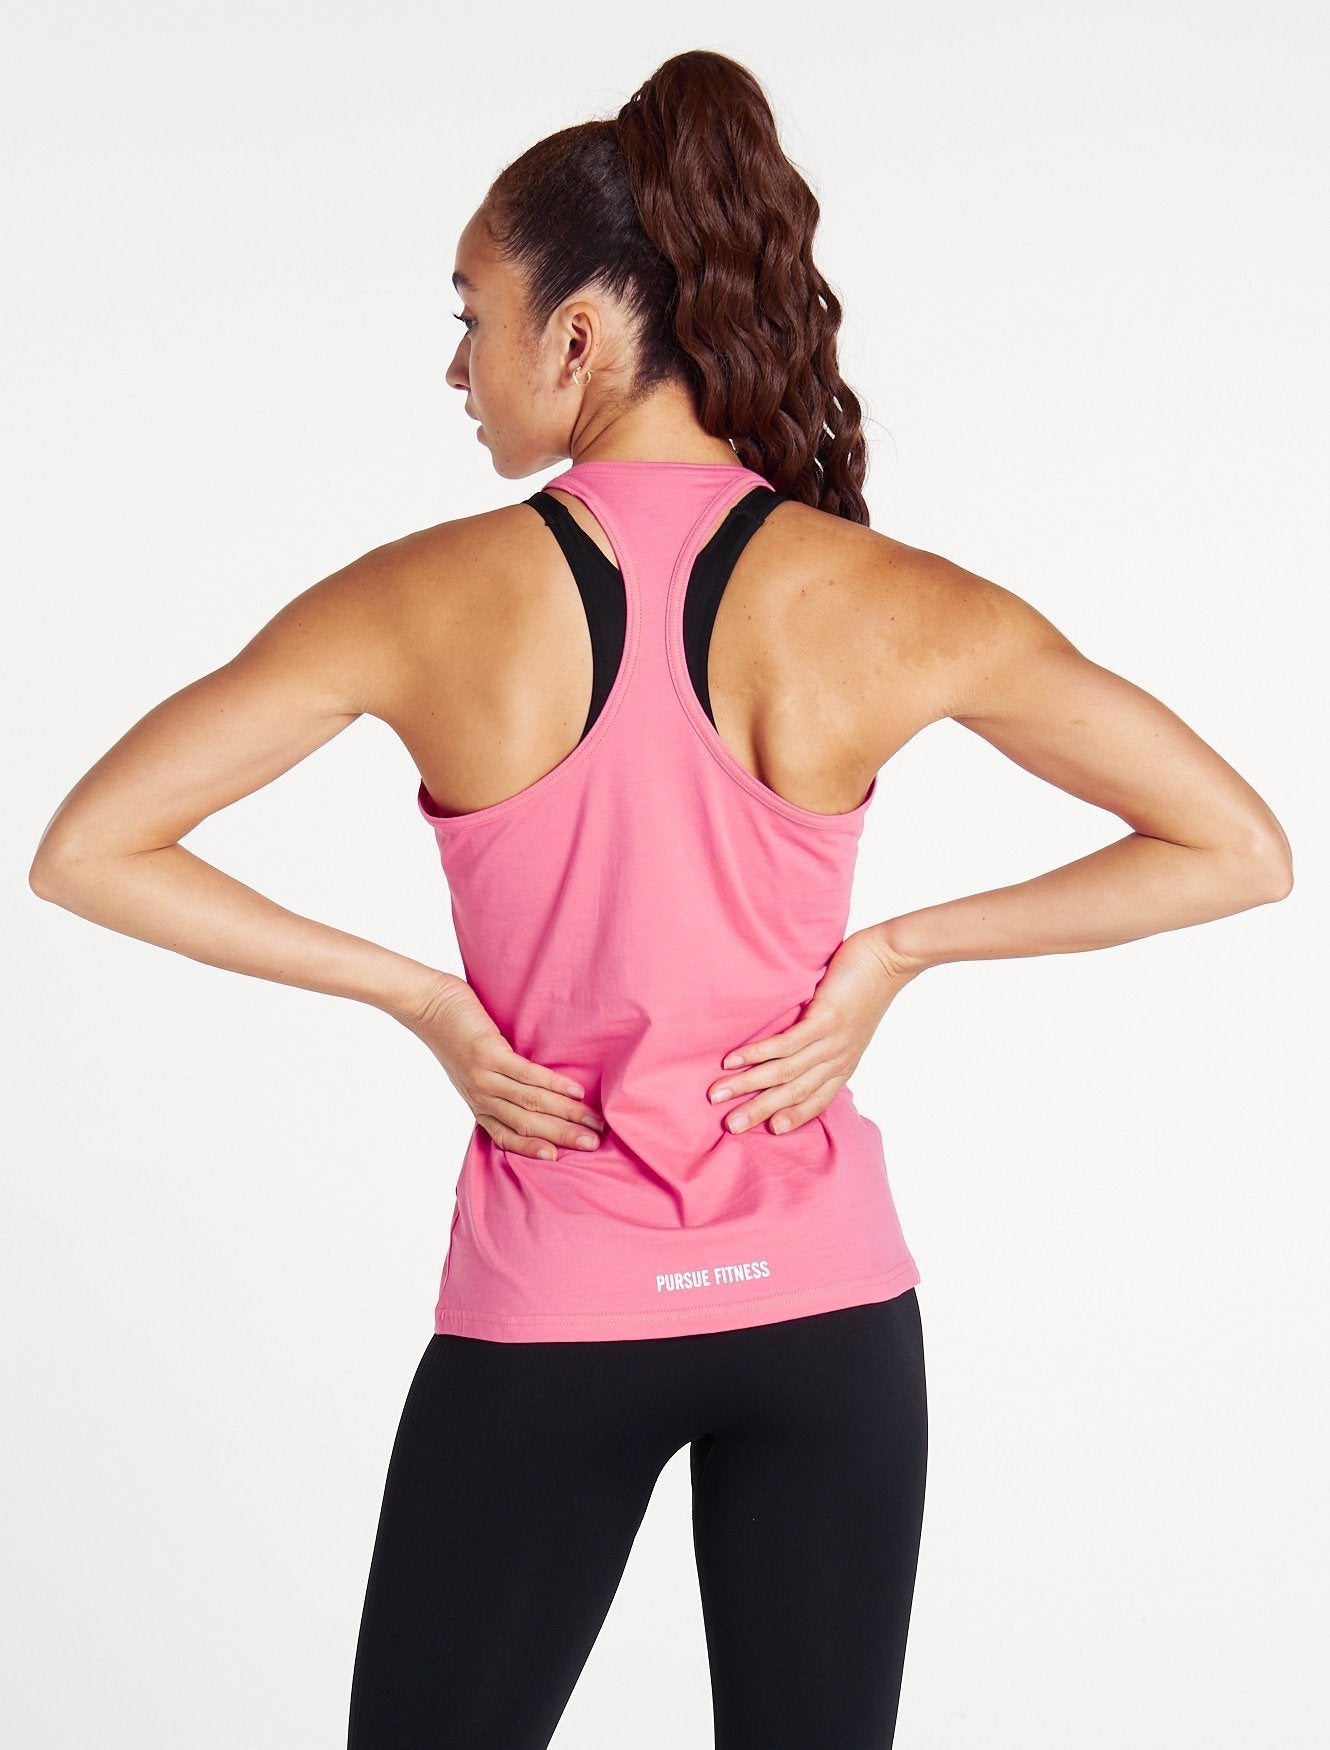 Iconic Vest / Pink Pursue Fitness 2